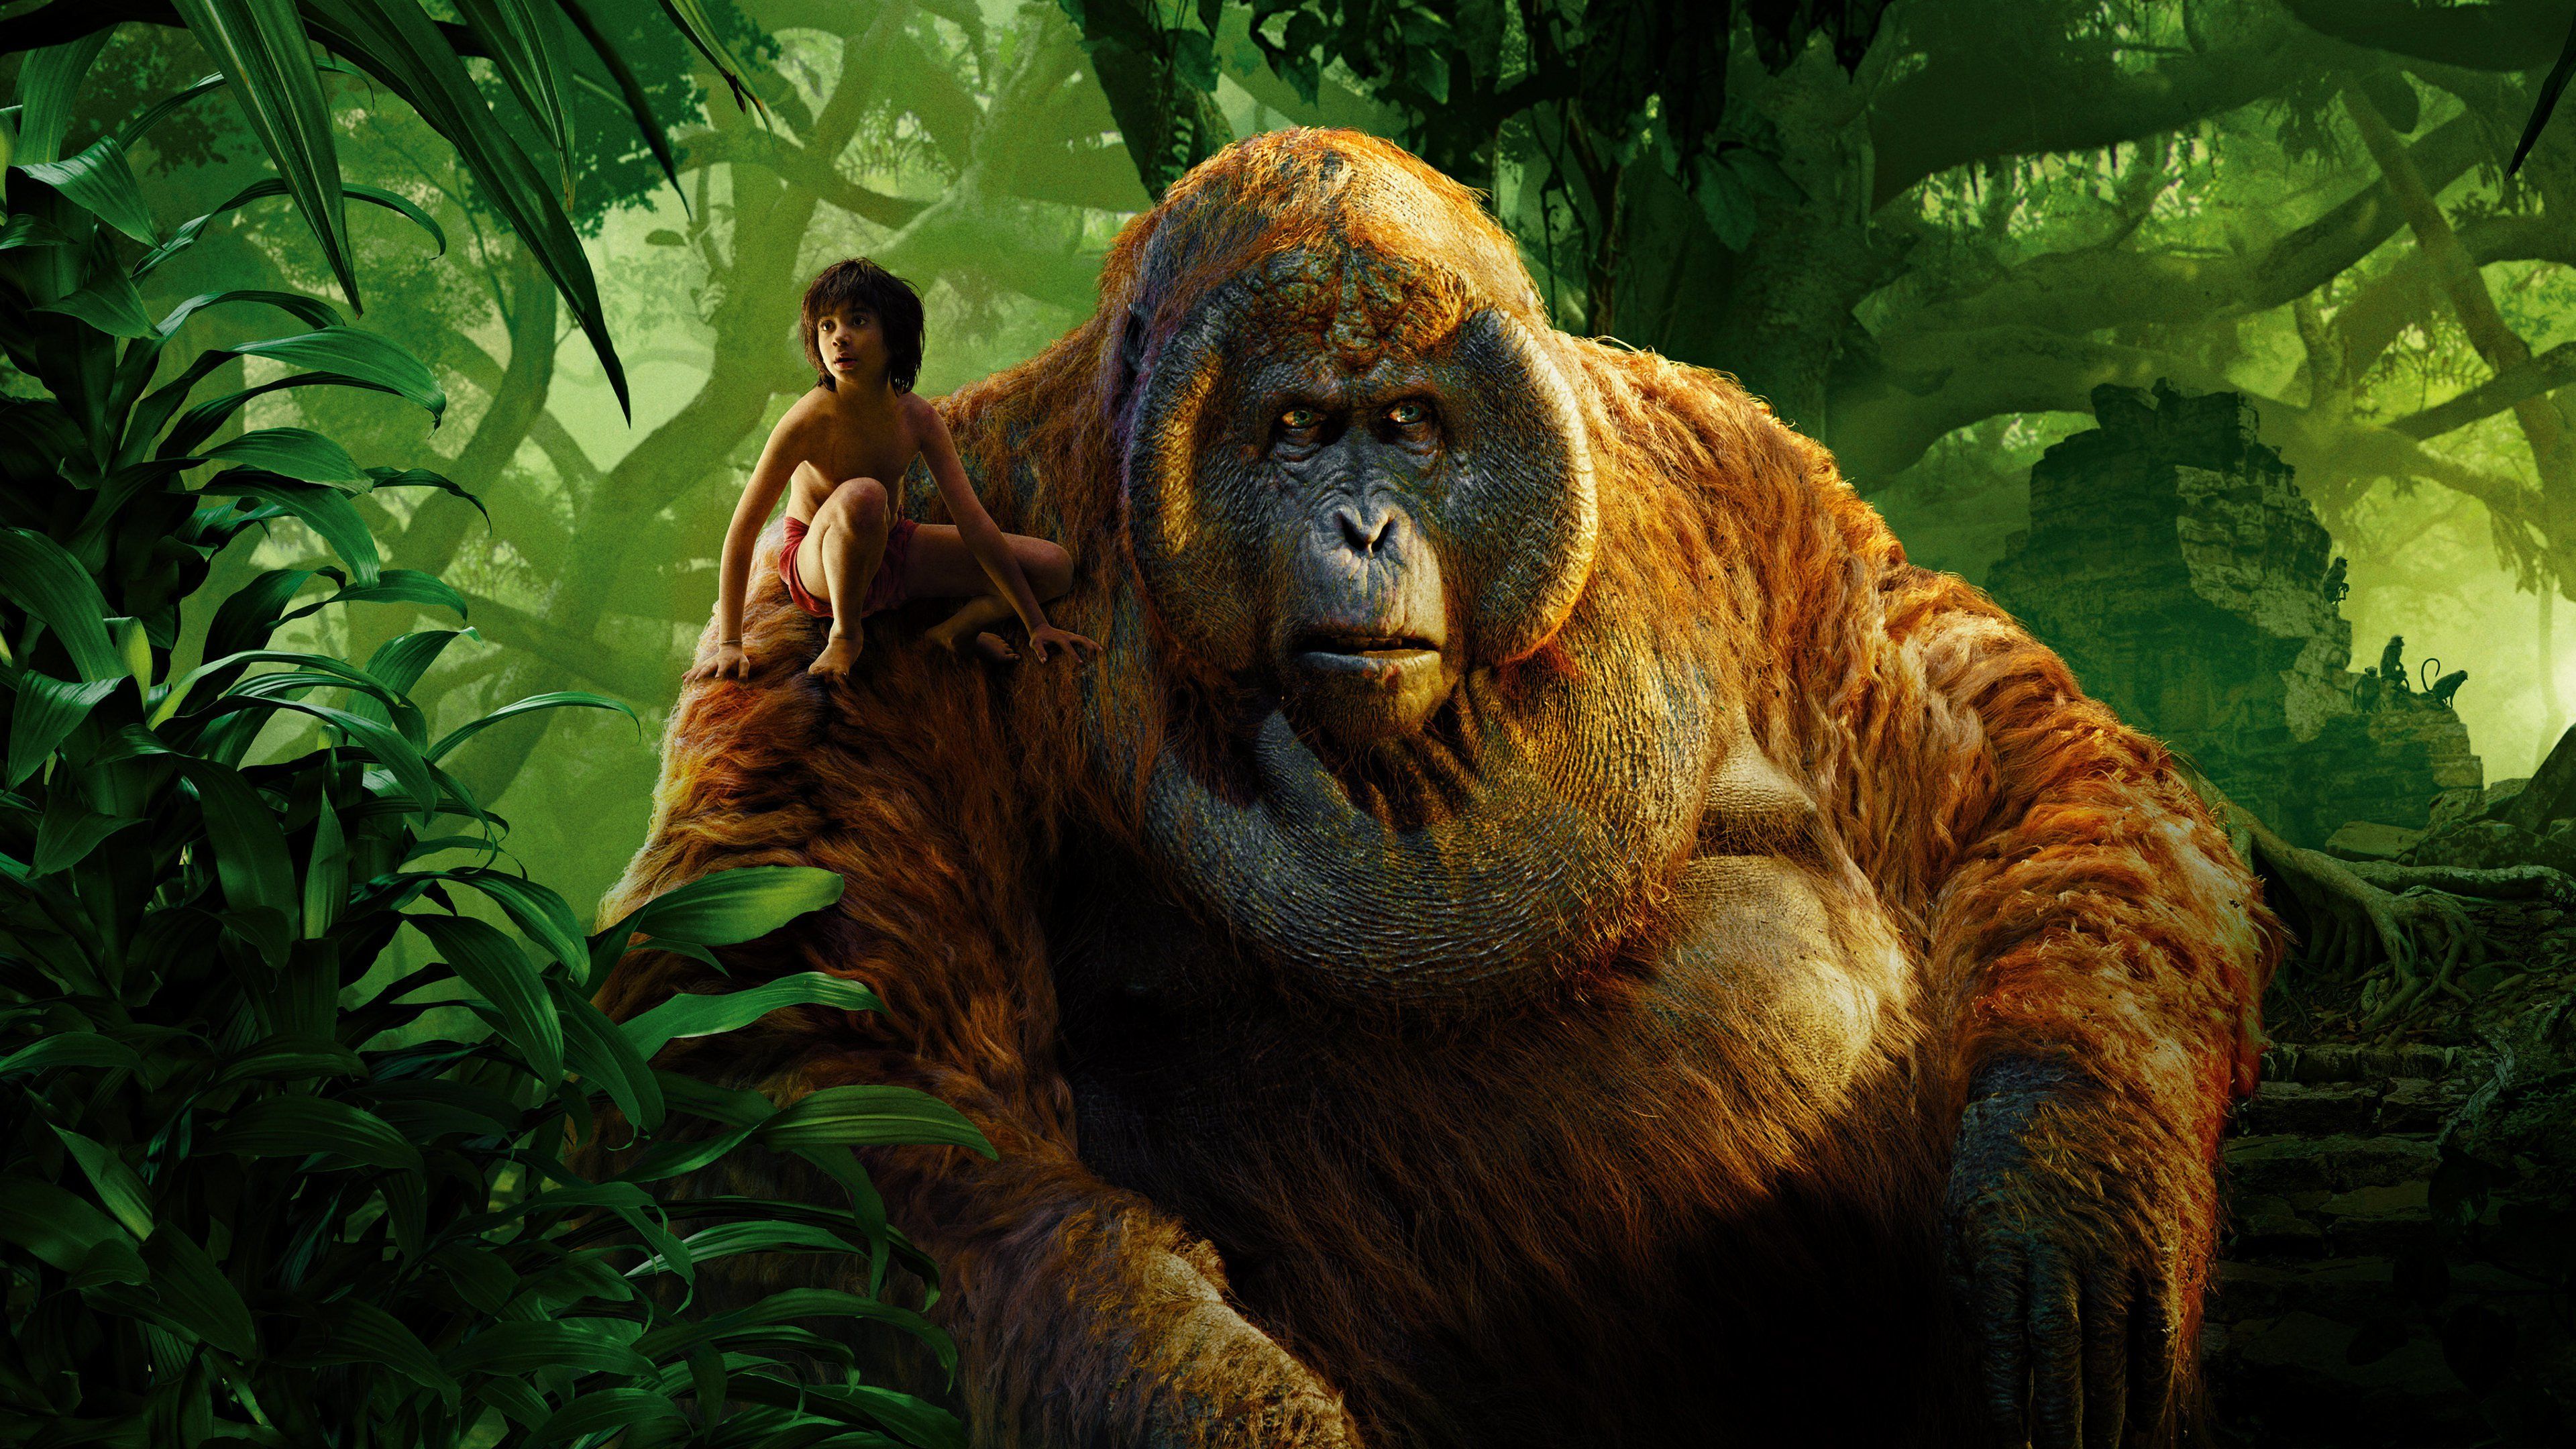 The Jungle Book (2016) 4k Ultra HD Wallpaper. Background Image